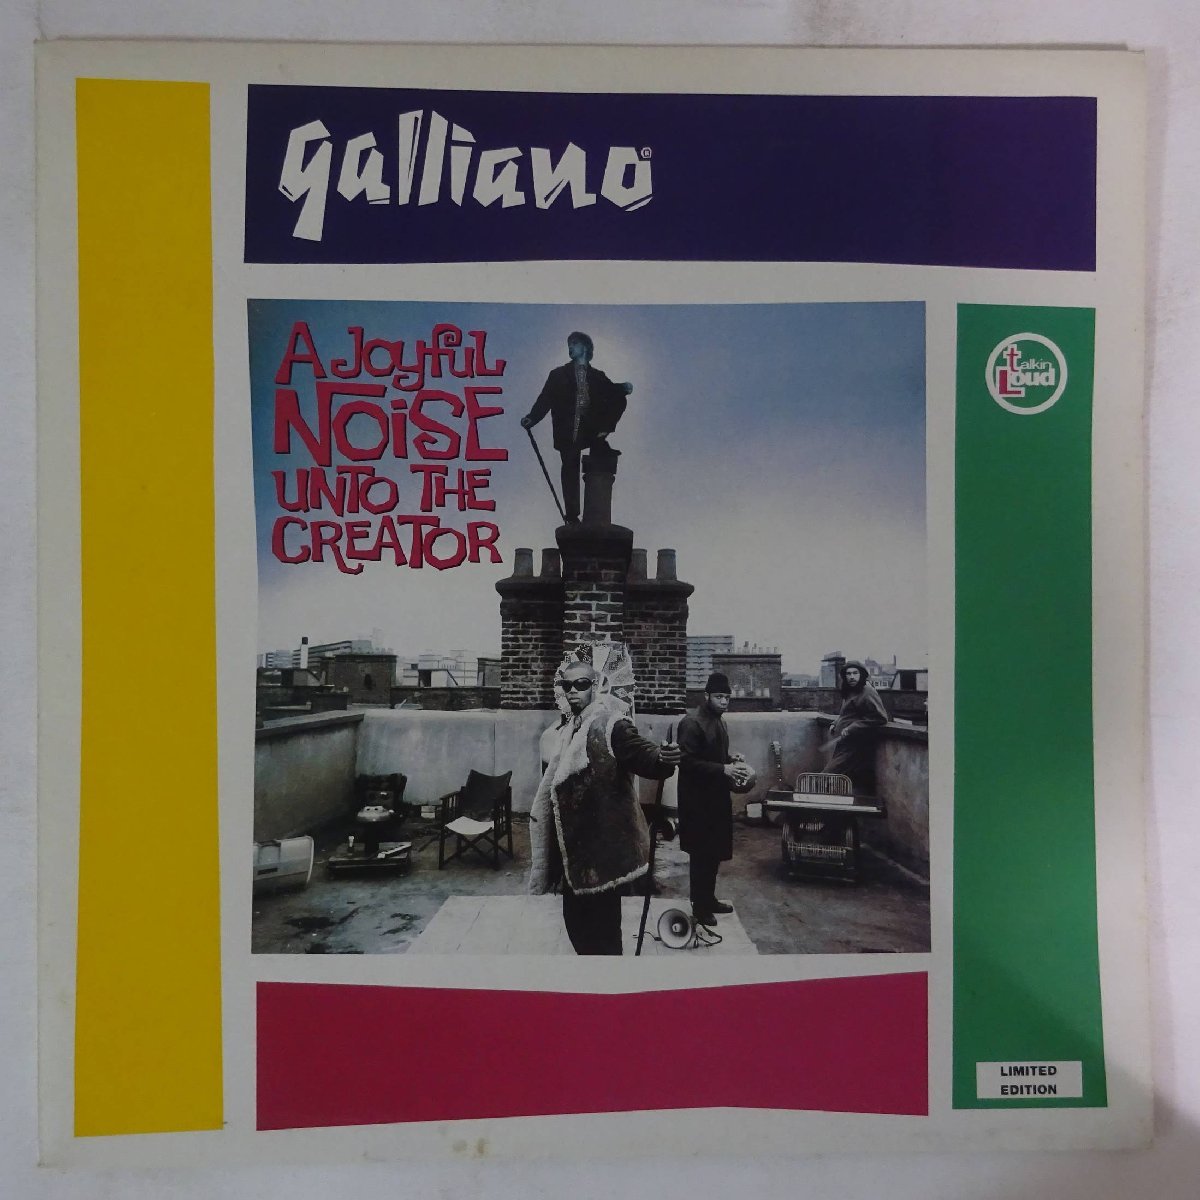 14025527;【Netherlands盤/LP】Galliano / A Joyful Noise Unto The Creator_画像1